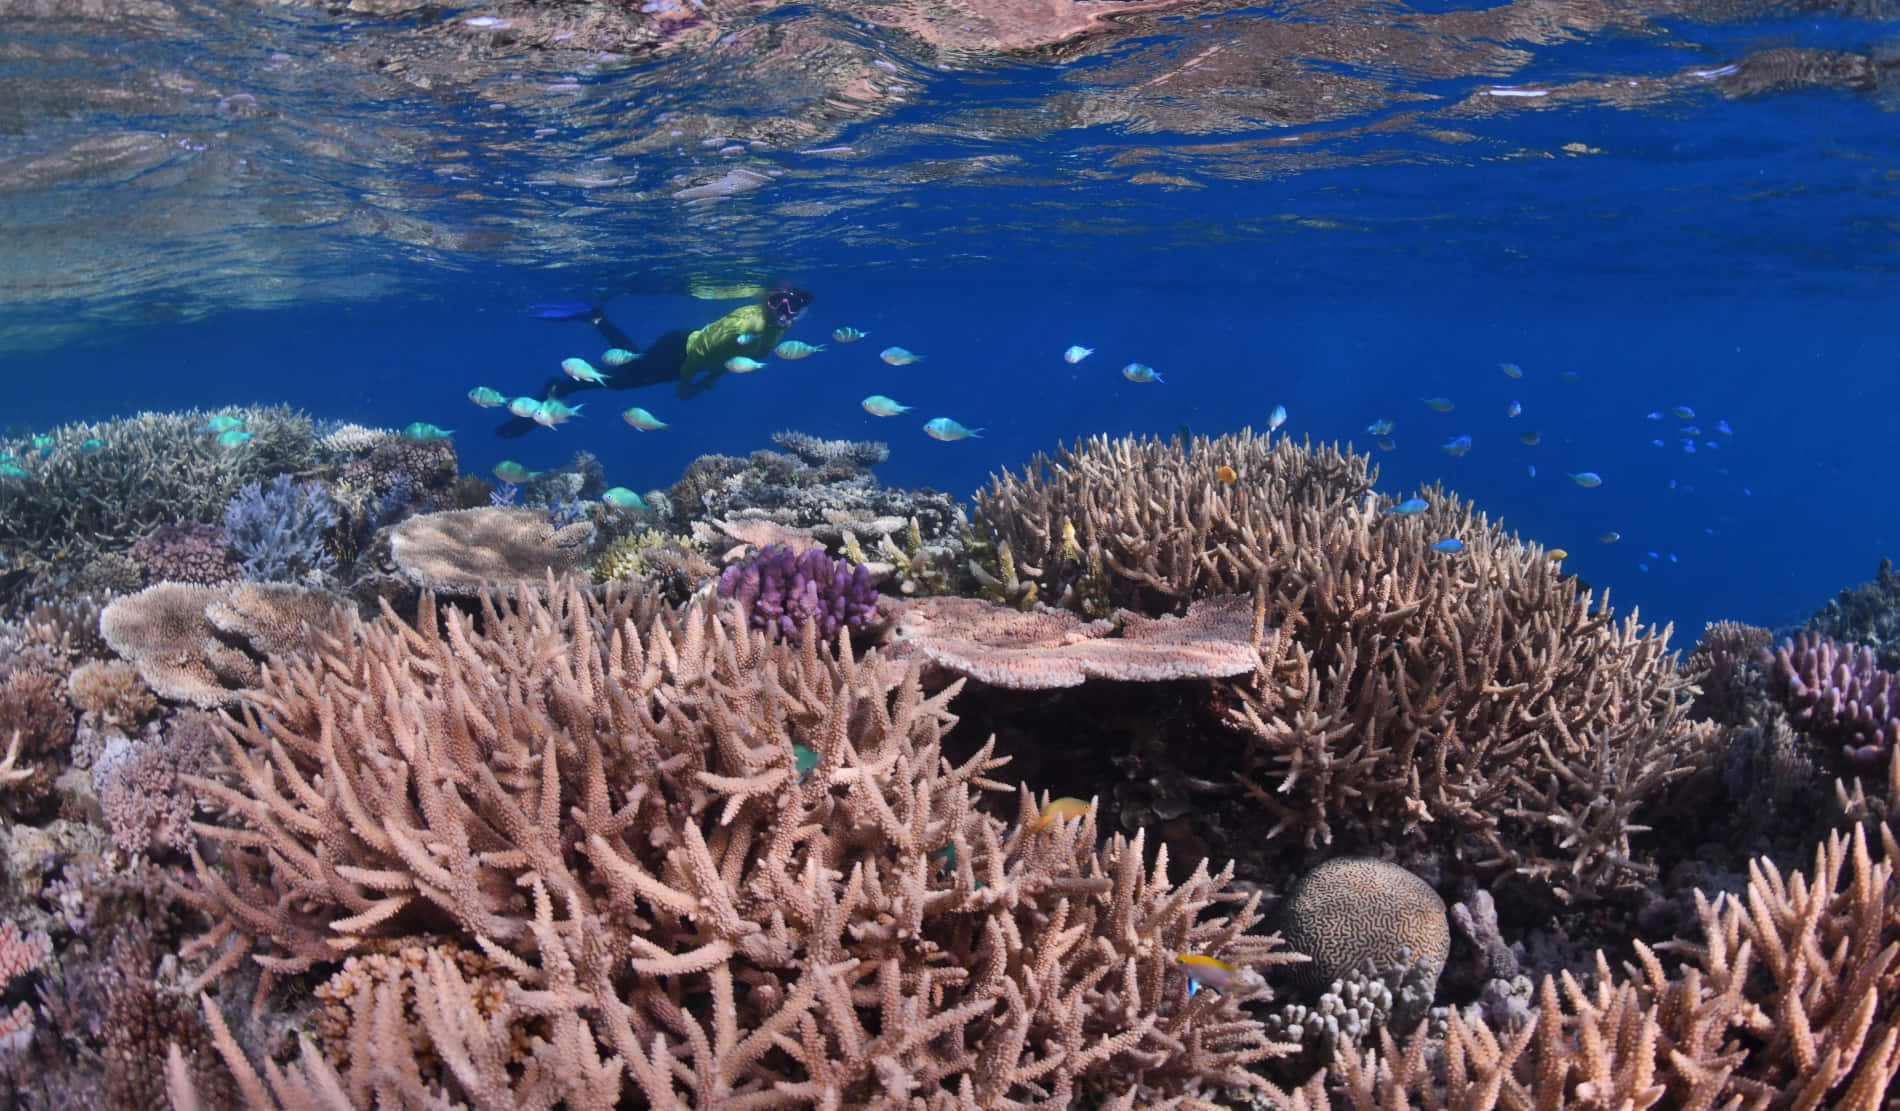 Imagende Un Arrecife De Coral En La Gran Barrera Secreta Del Mar.